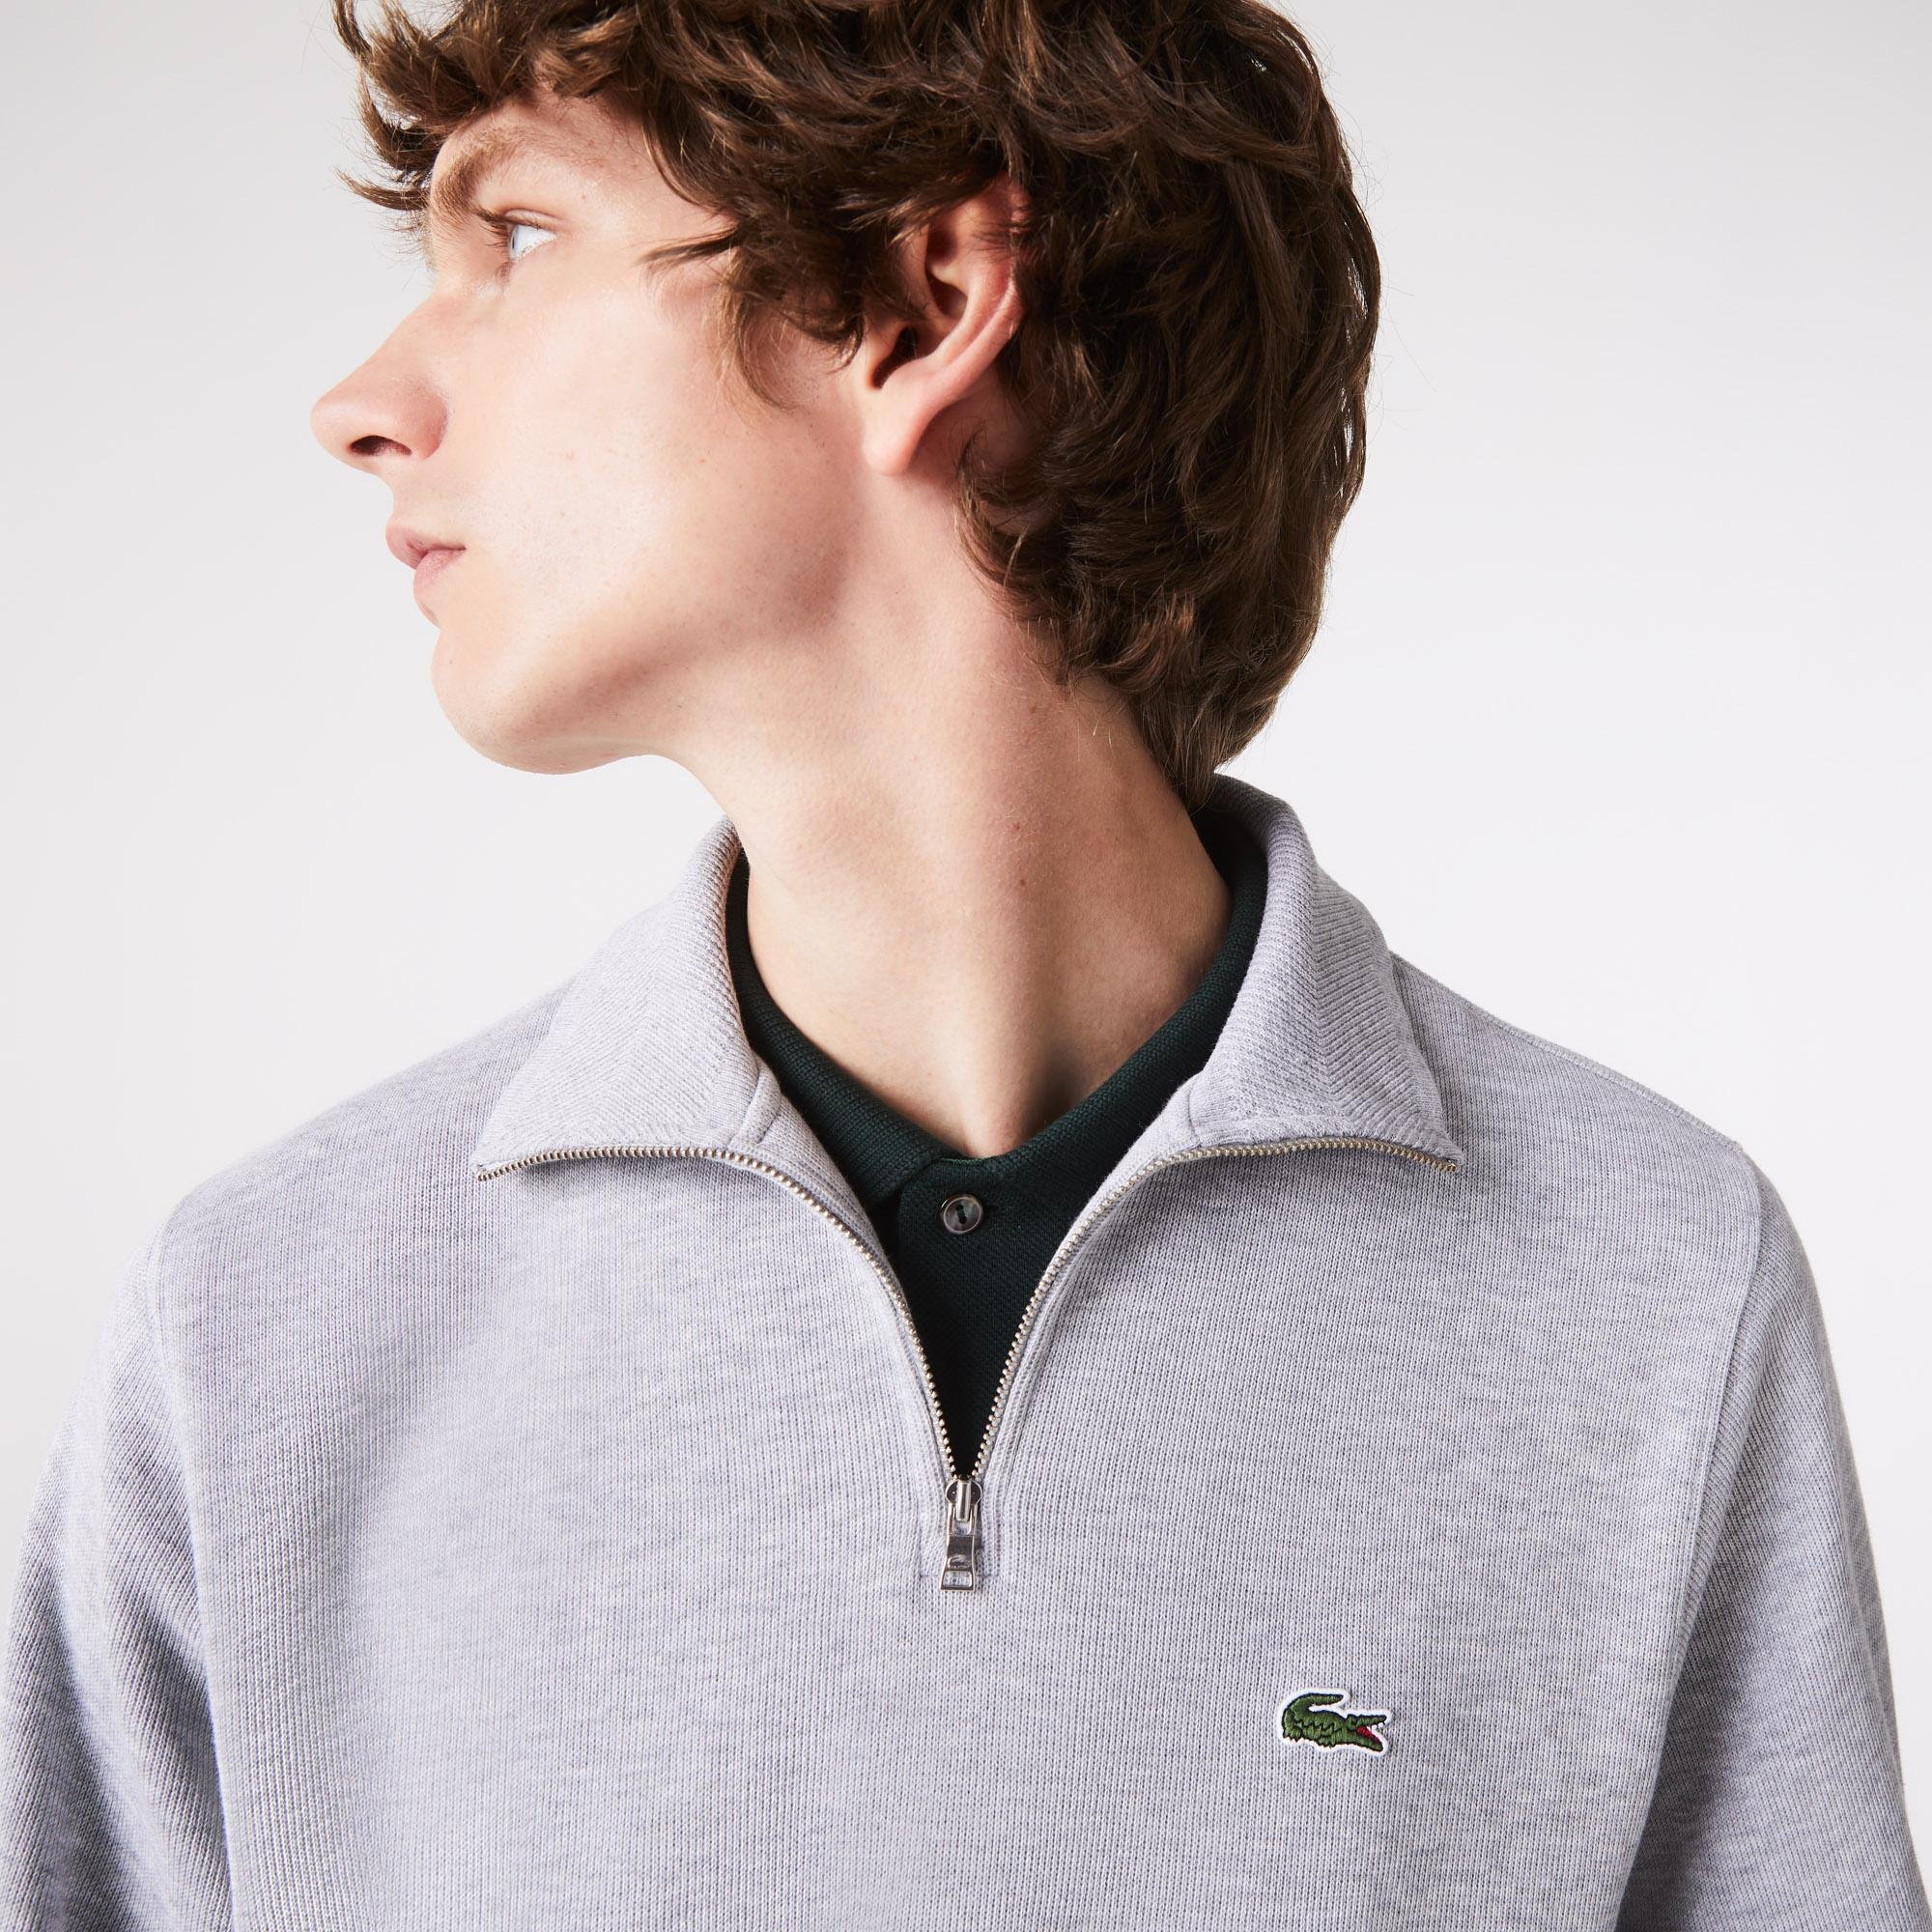 Lacoste Men's Zippered Stand-Up Collar Cotton Sweatshirt